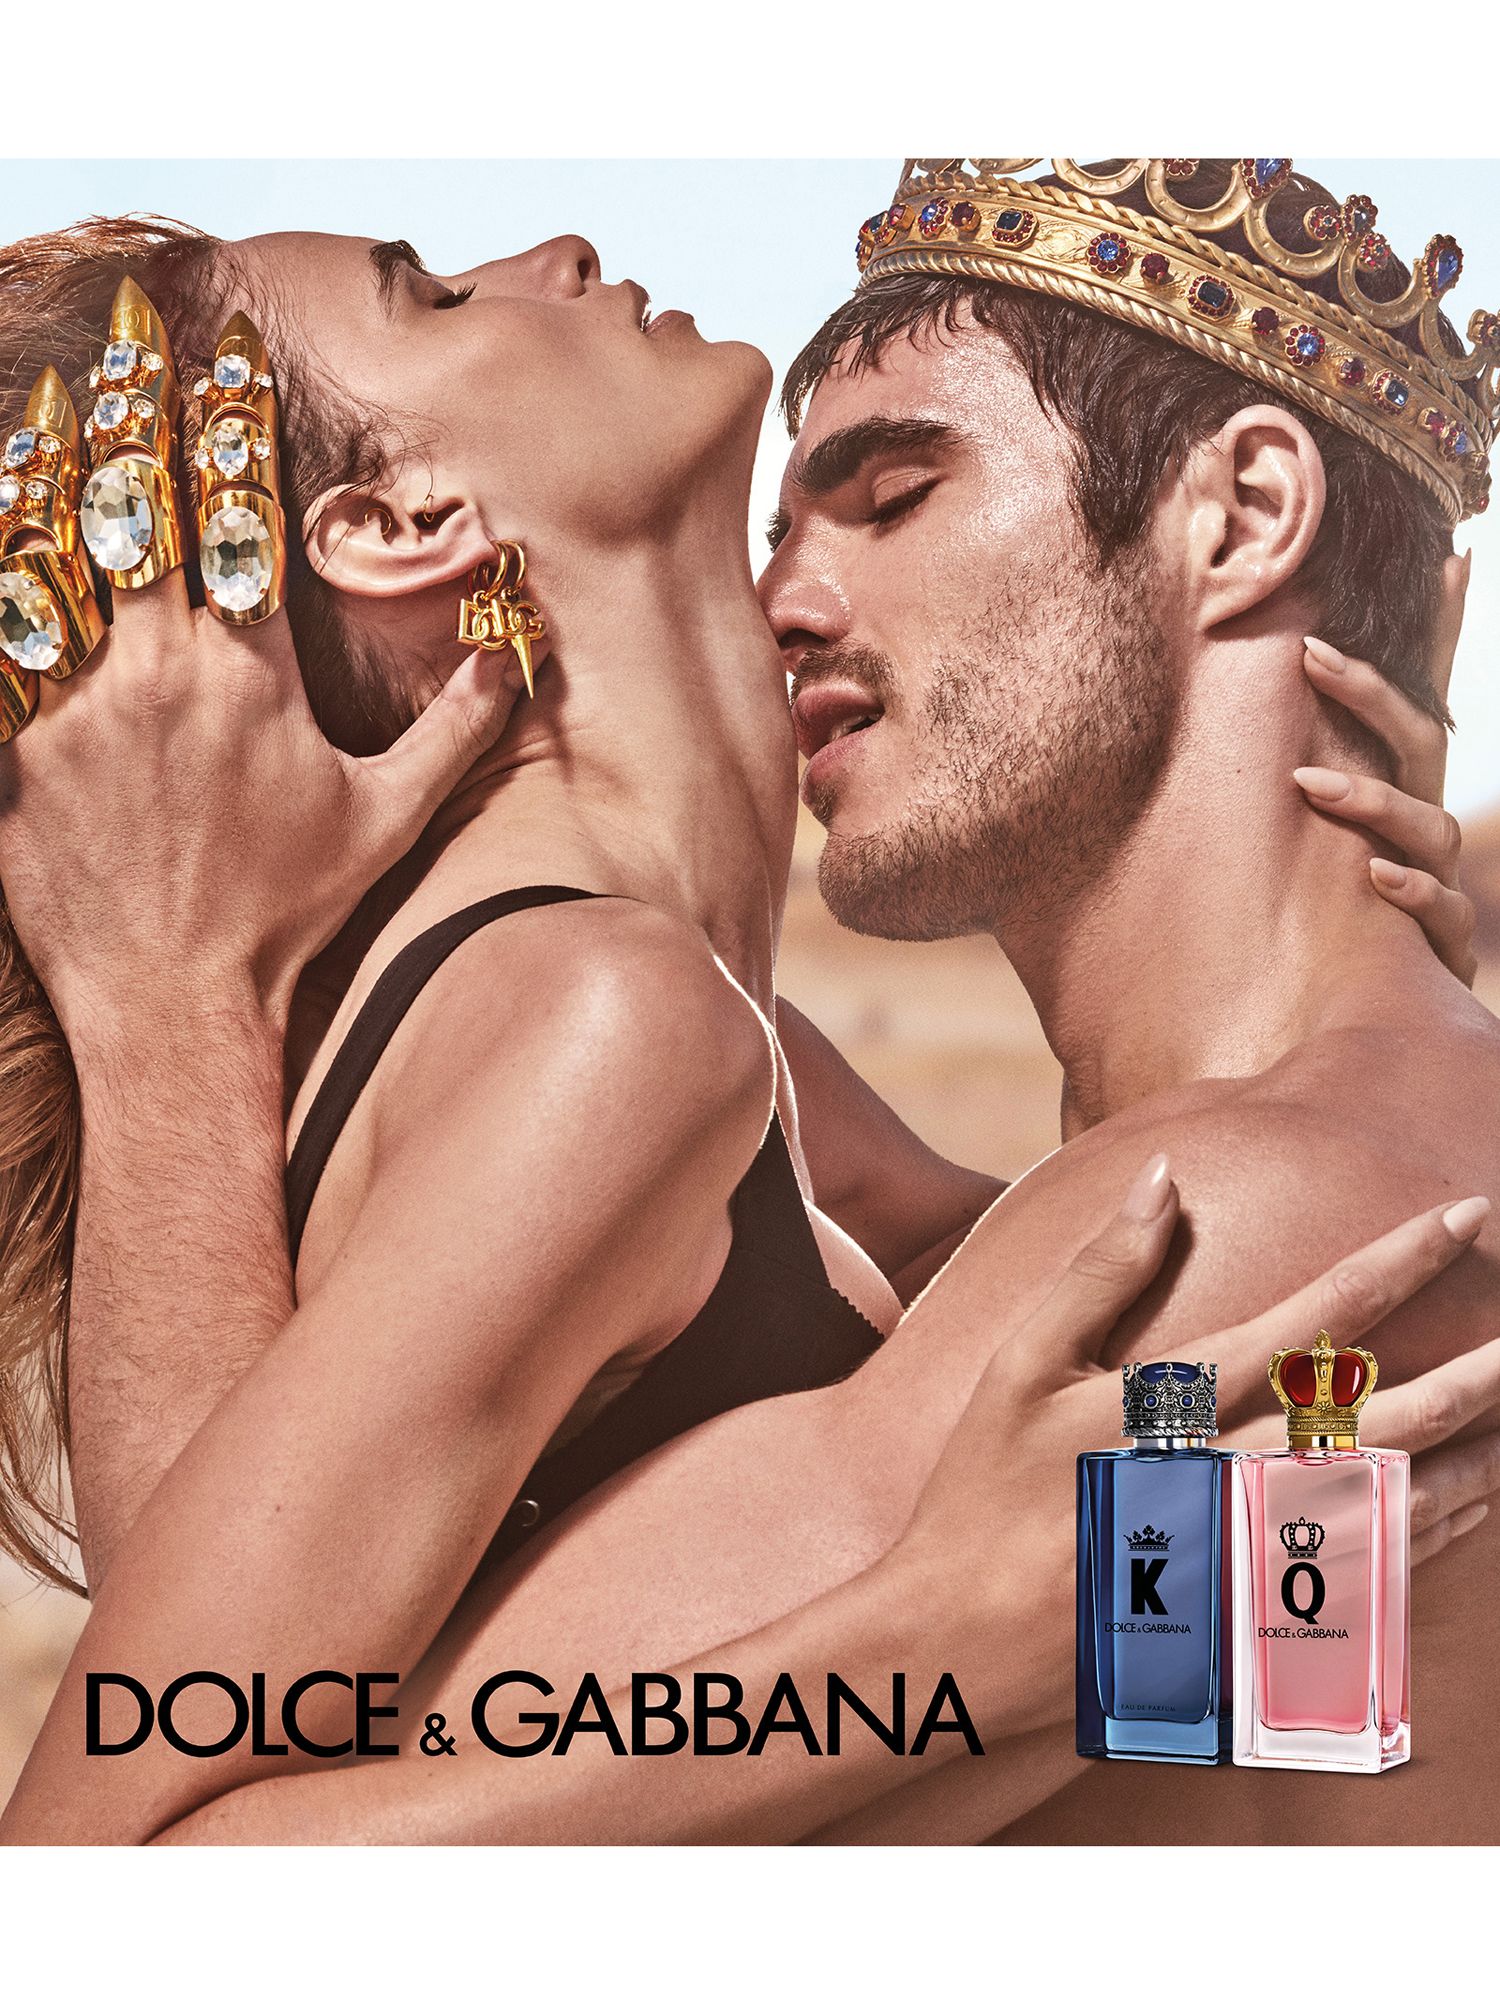 Dolce & Gabbana Q by Dolce & Gabbana Eau de Parfum, 30ml 9